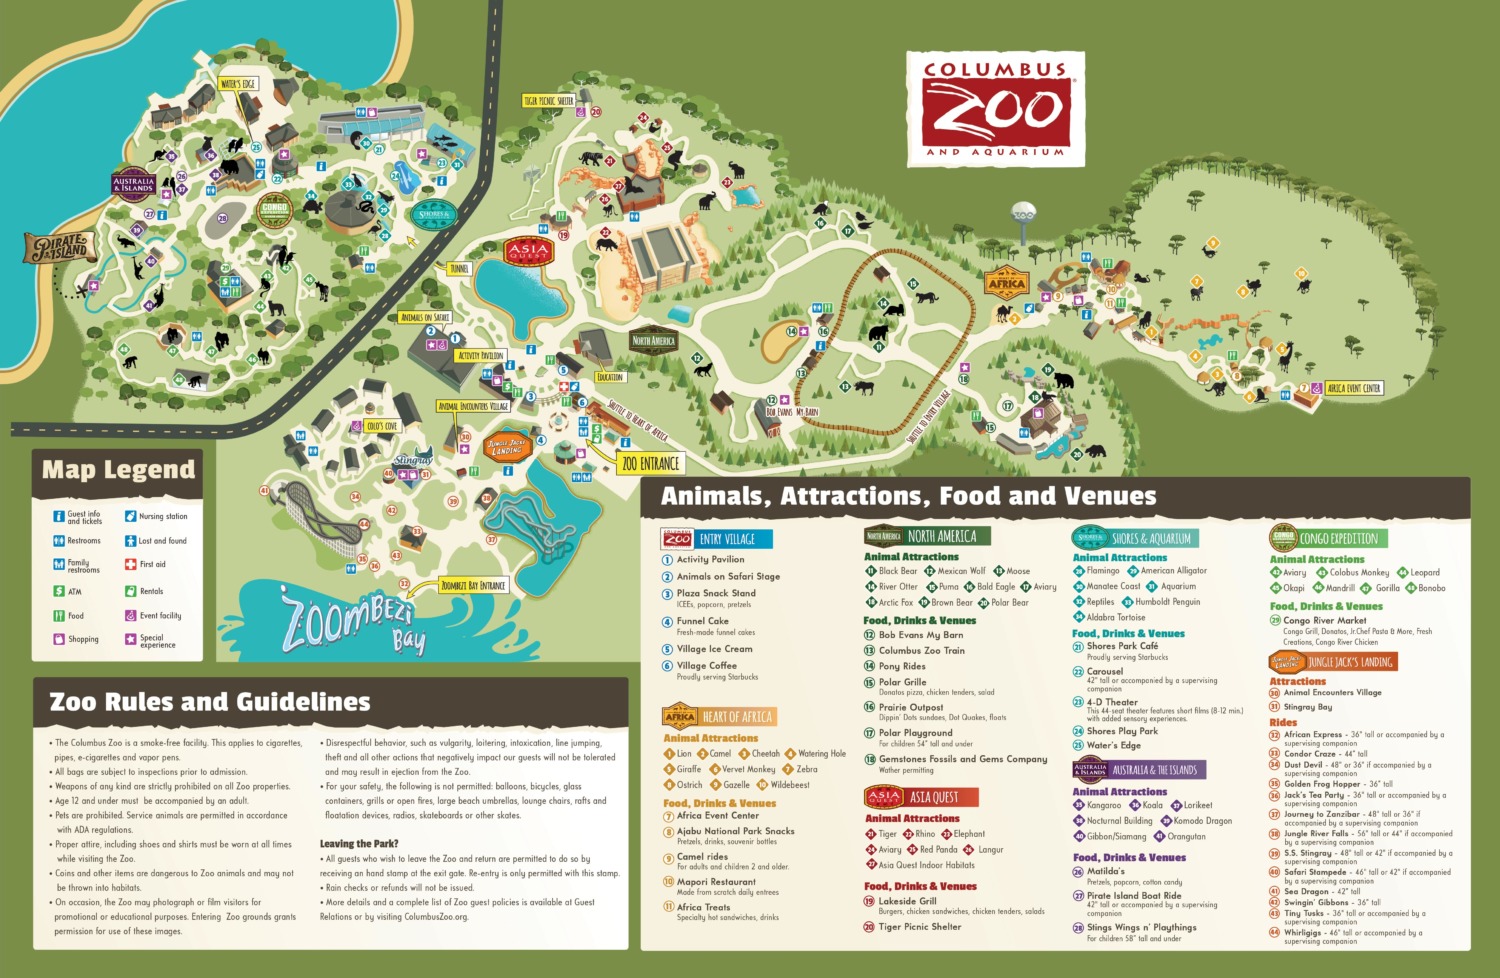 Columbus Zoo and Aquarium Sharing Horizons